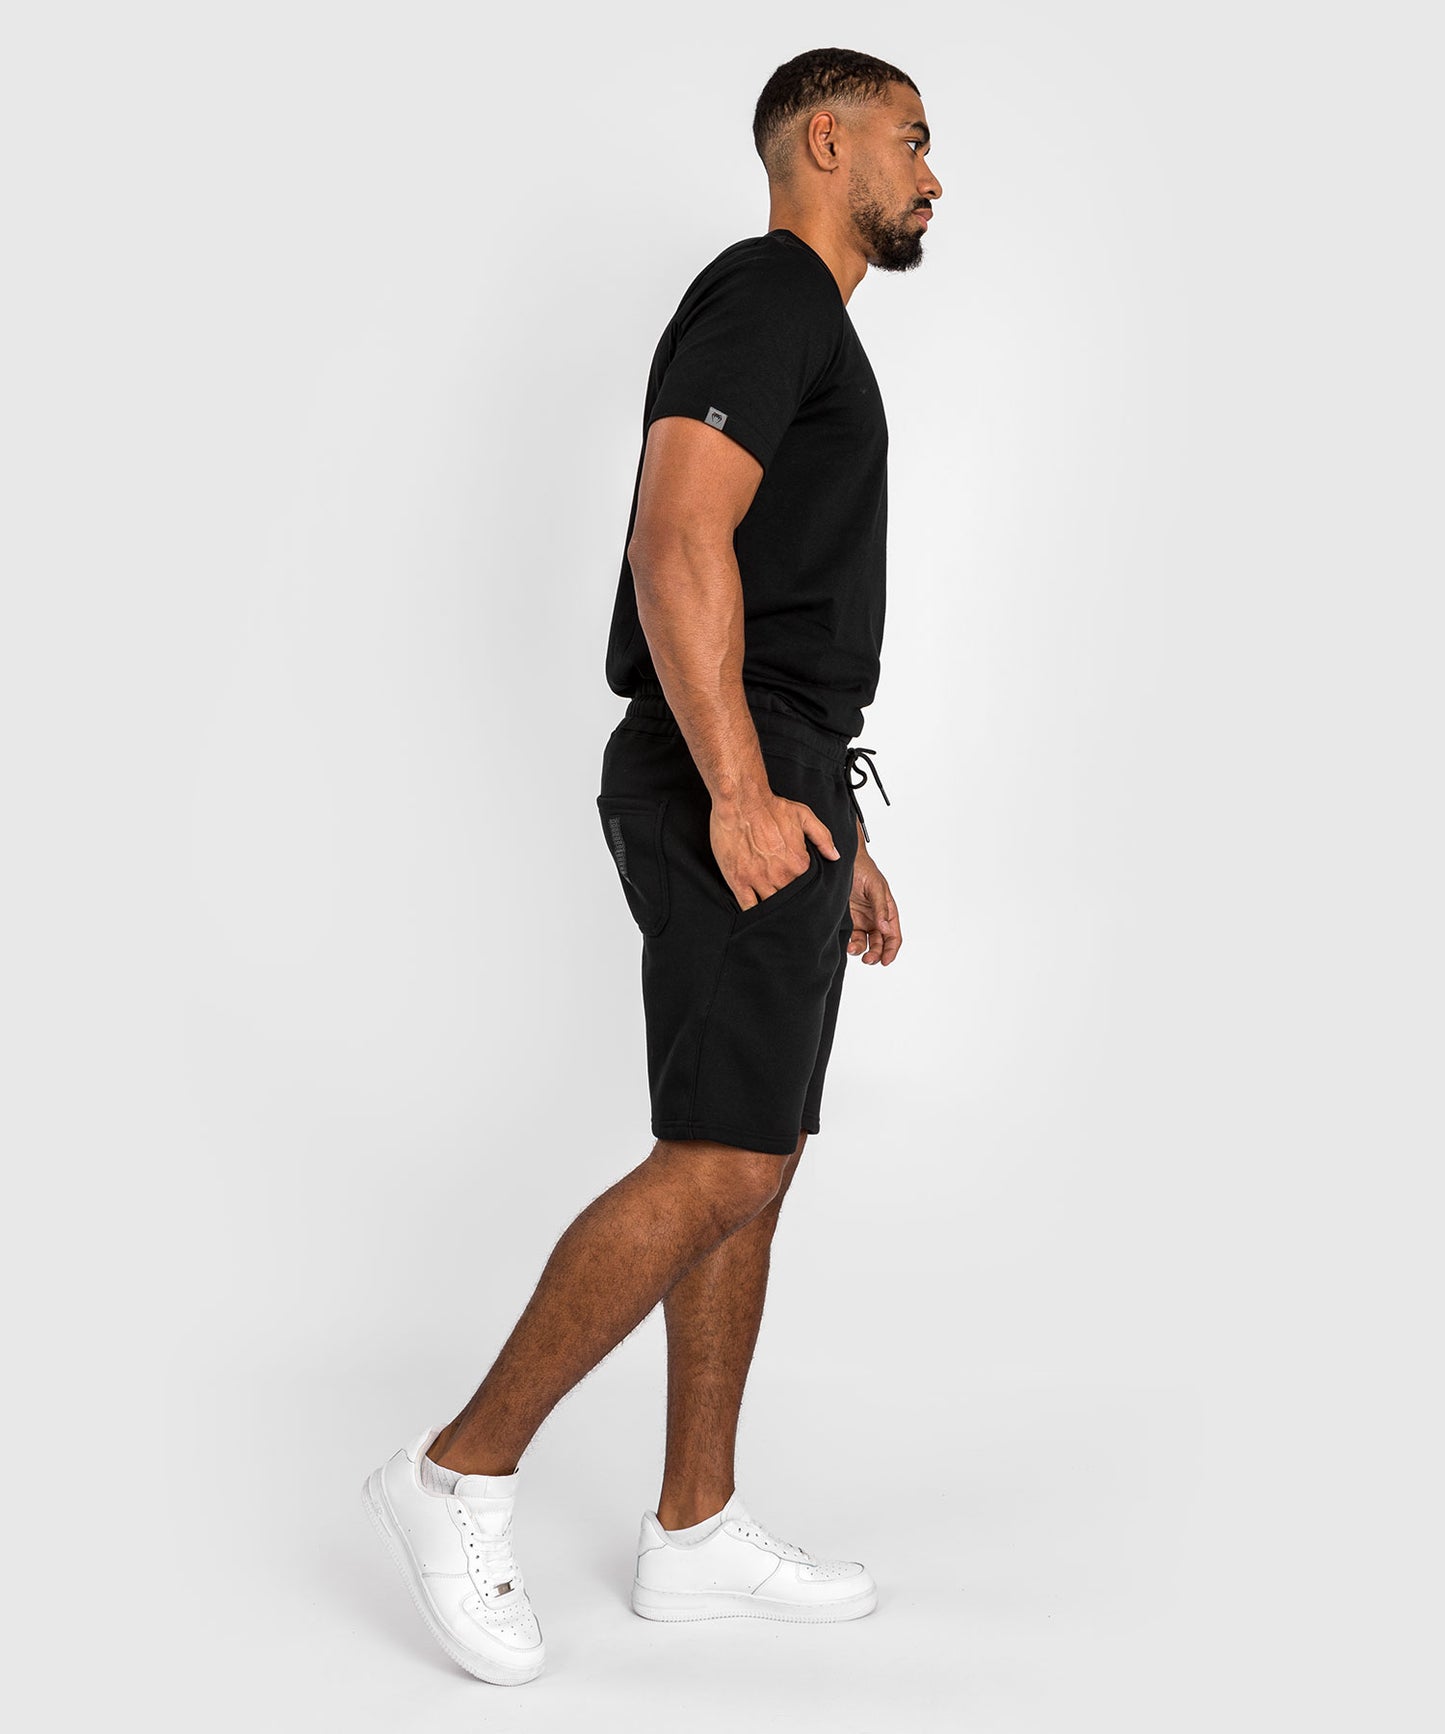 Men's Power Shorts, Black